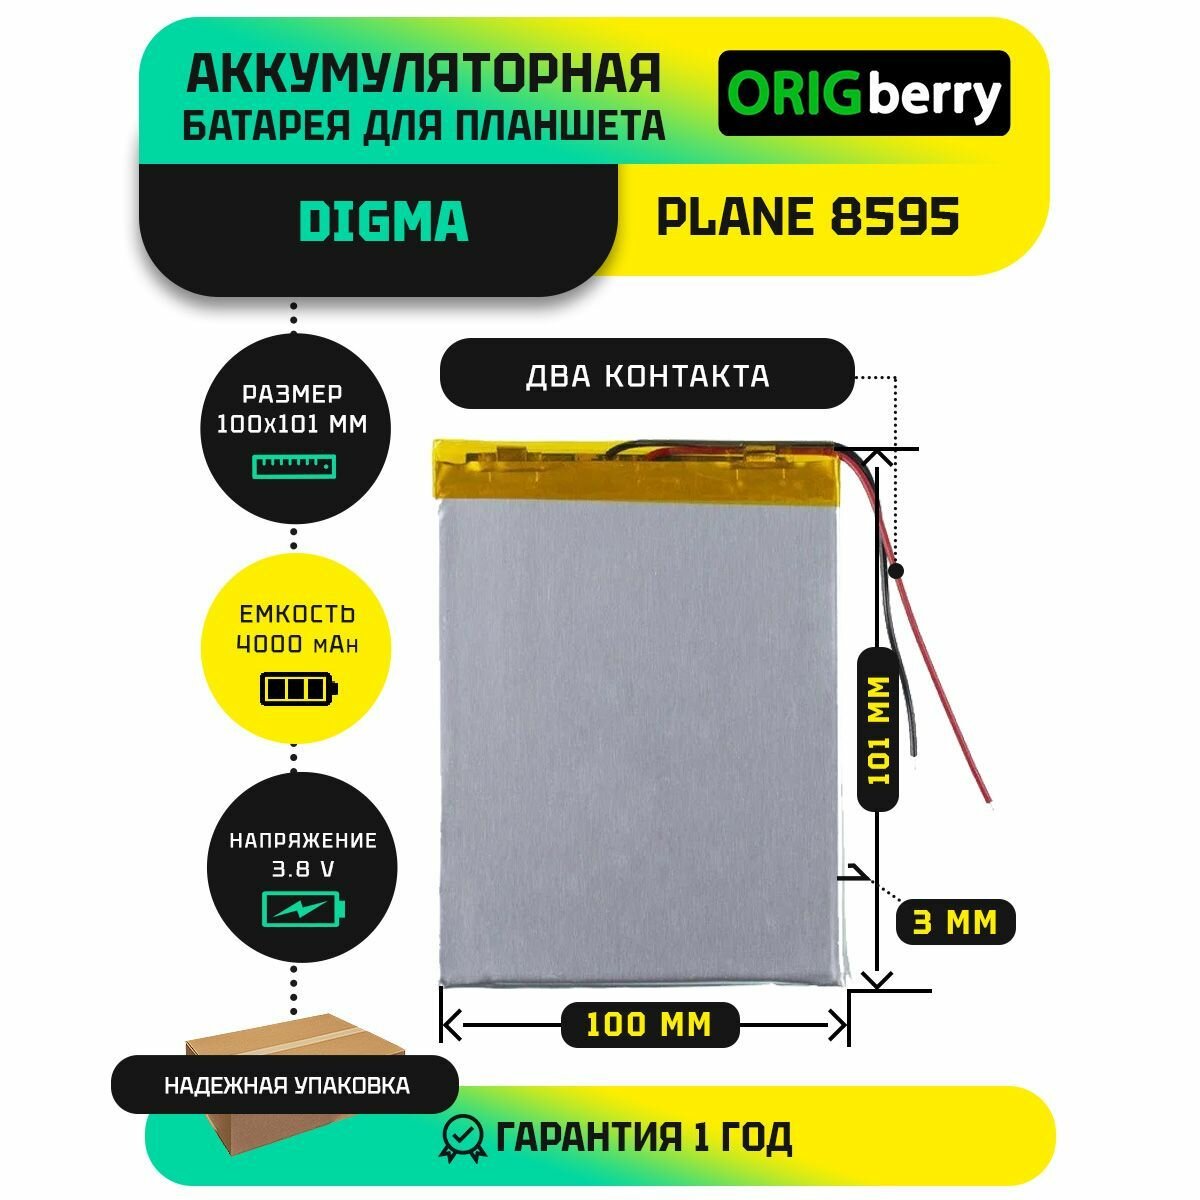 Аккумулятор для планшета Digma Plane 8595 3G (PS8212PG) 38 V / 4000 mAh / 101мм x 100мм x 3мм / без коннектора